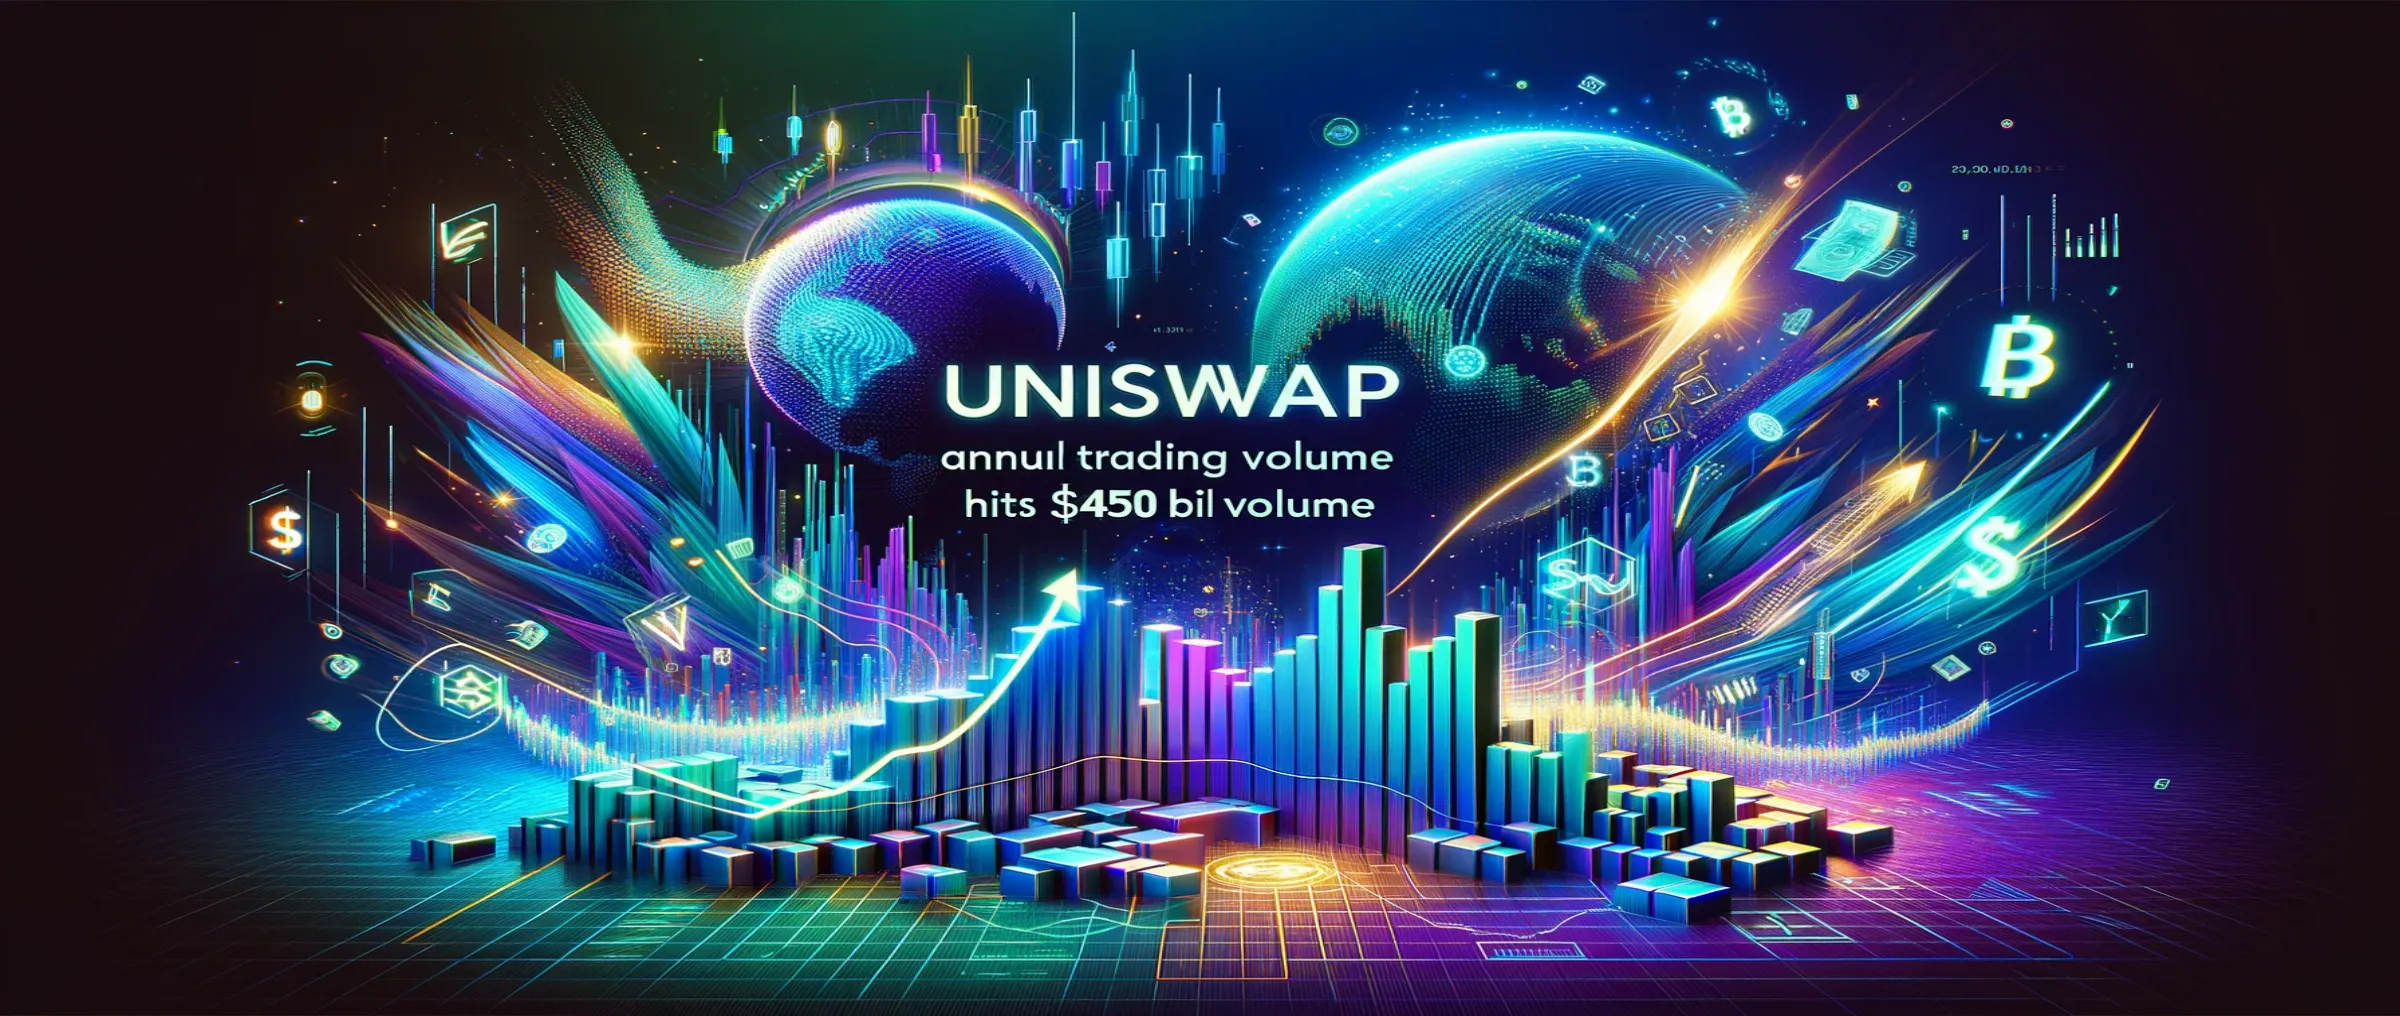 Объем торговли на Uniswap достиг $450 миллиардов за год